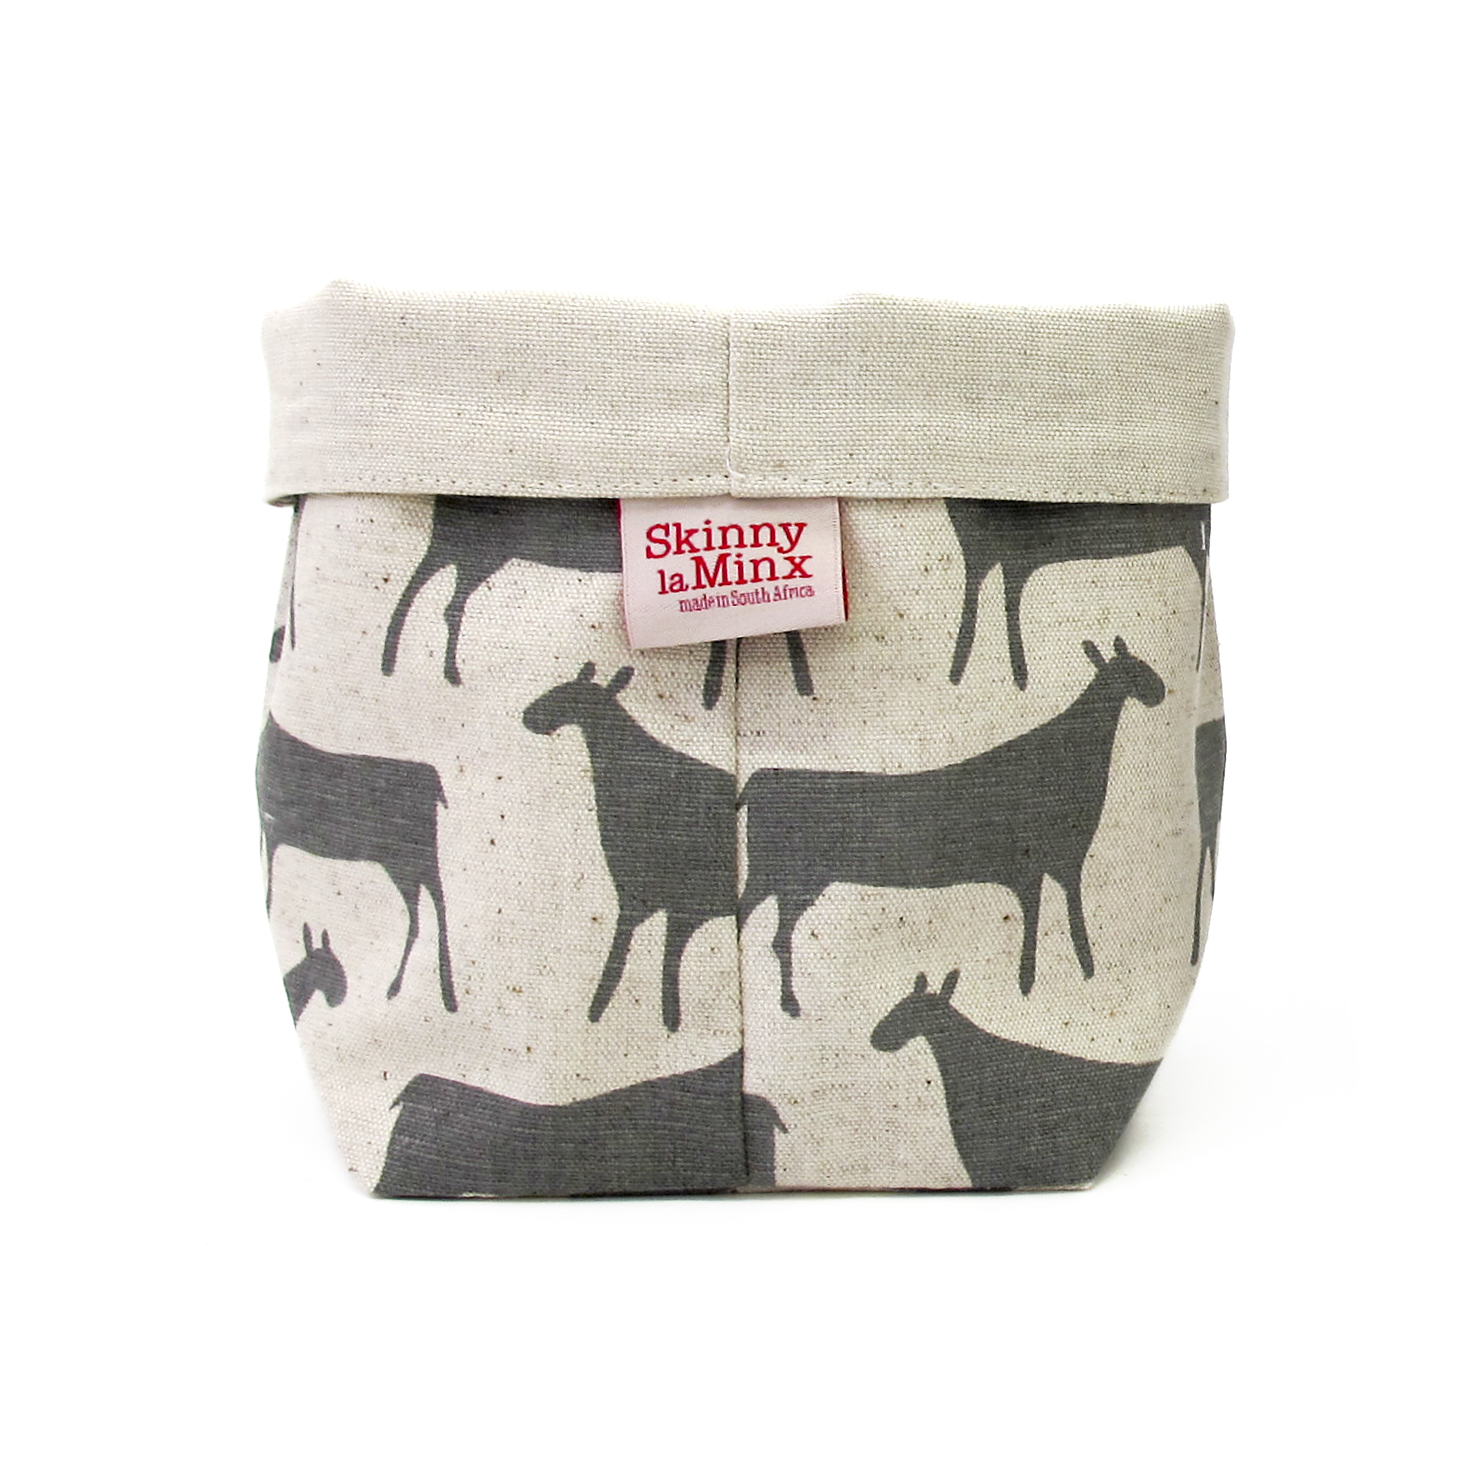 Skinny LaMinx Soft Bucket - Herds Grey- Medium